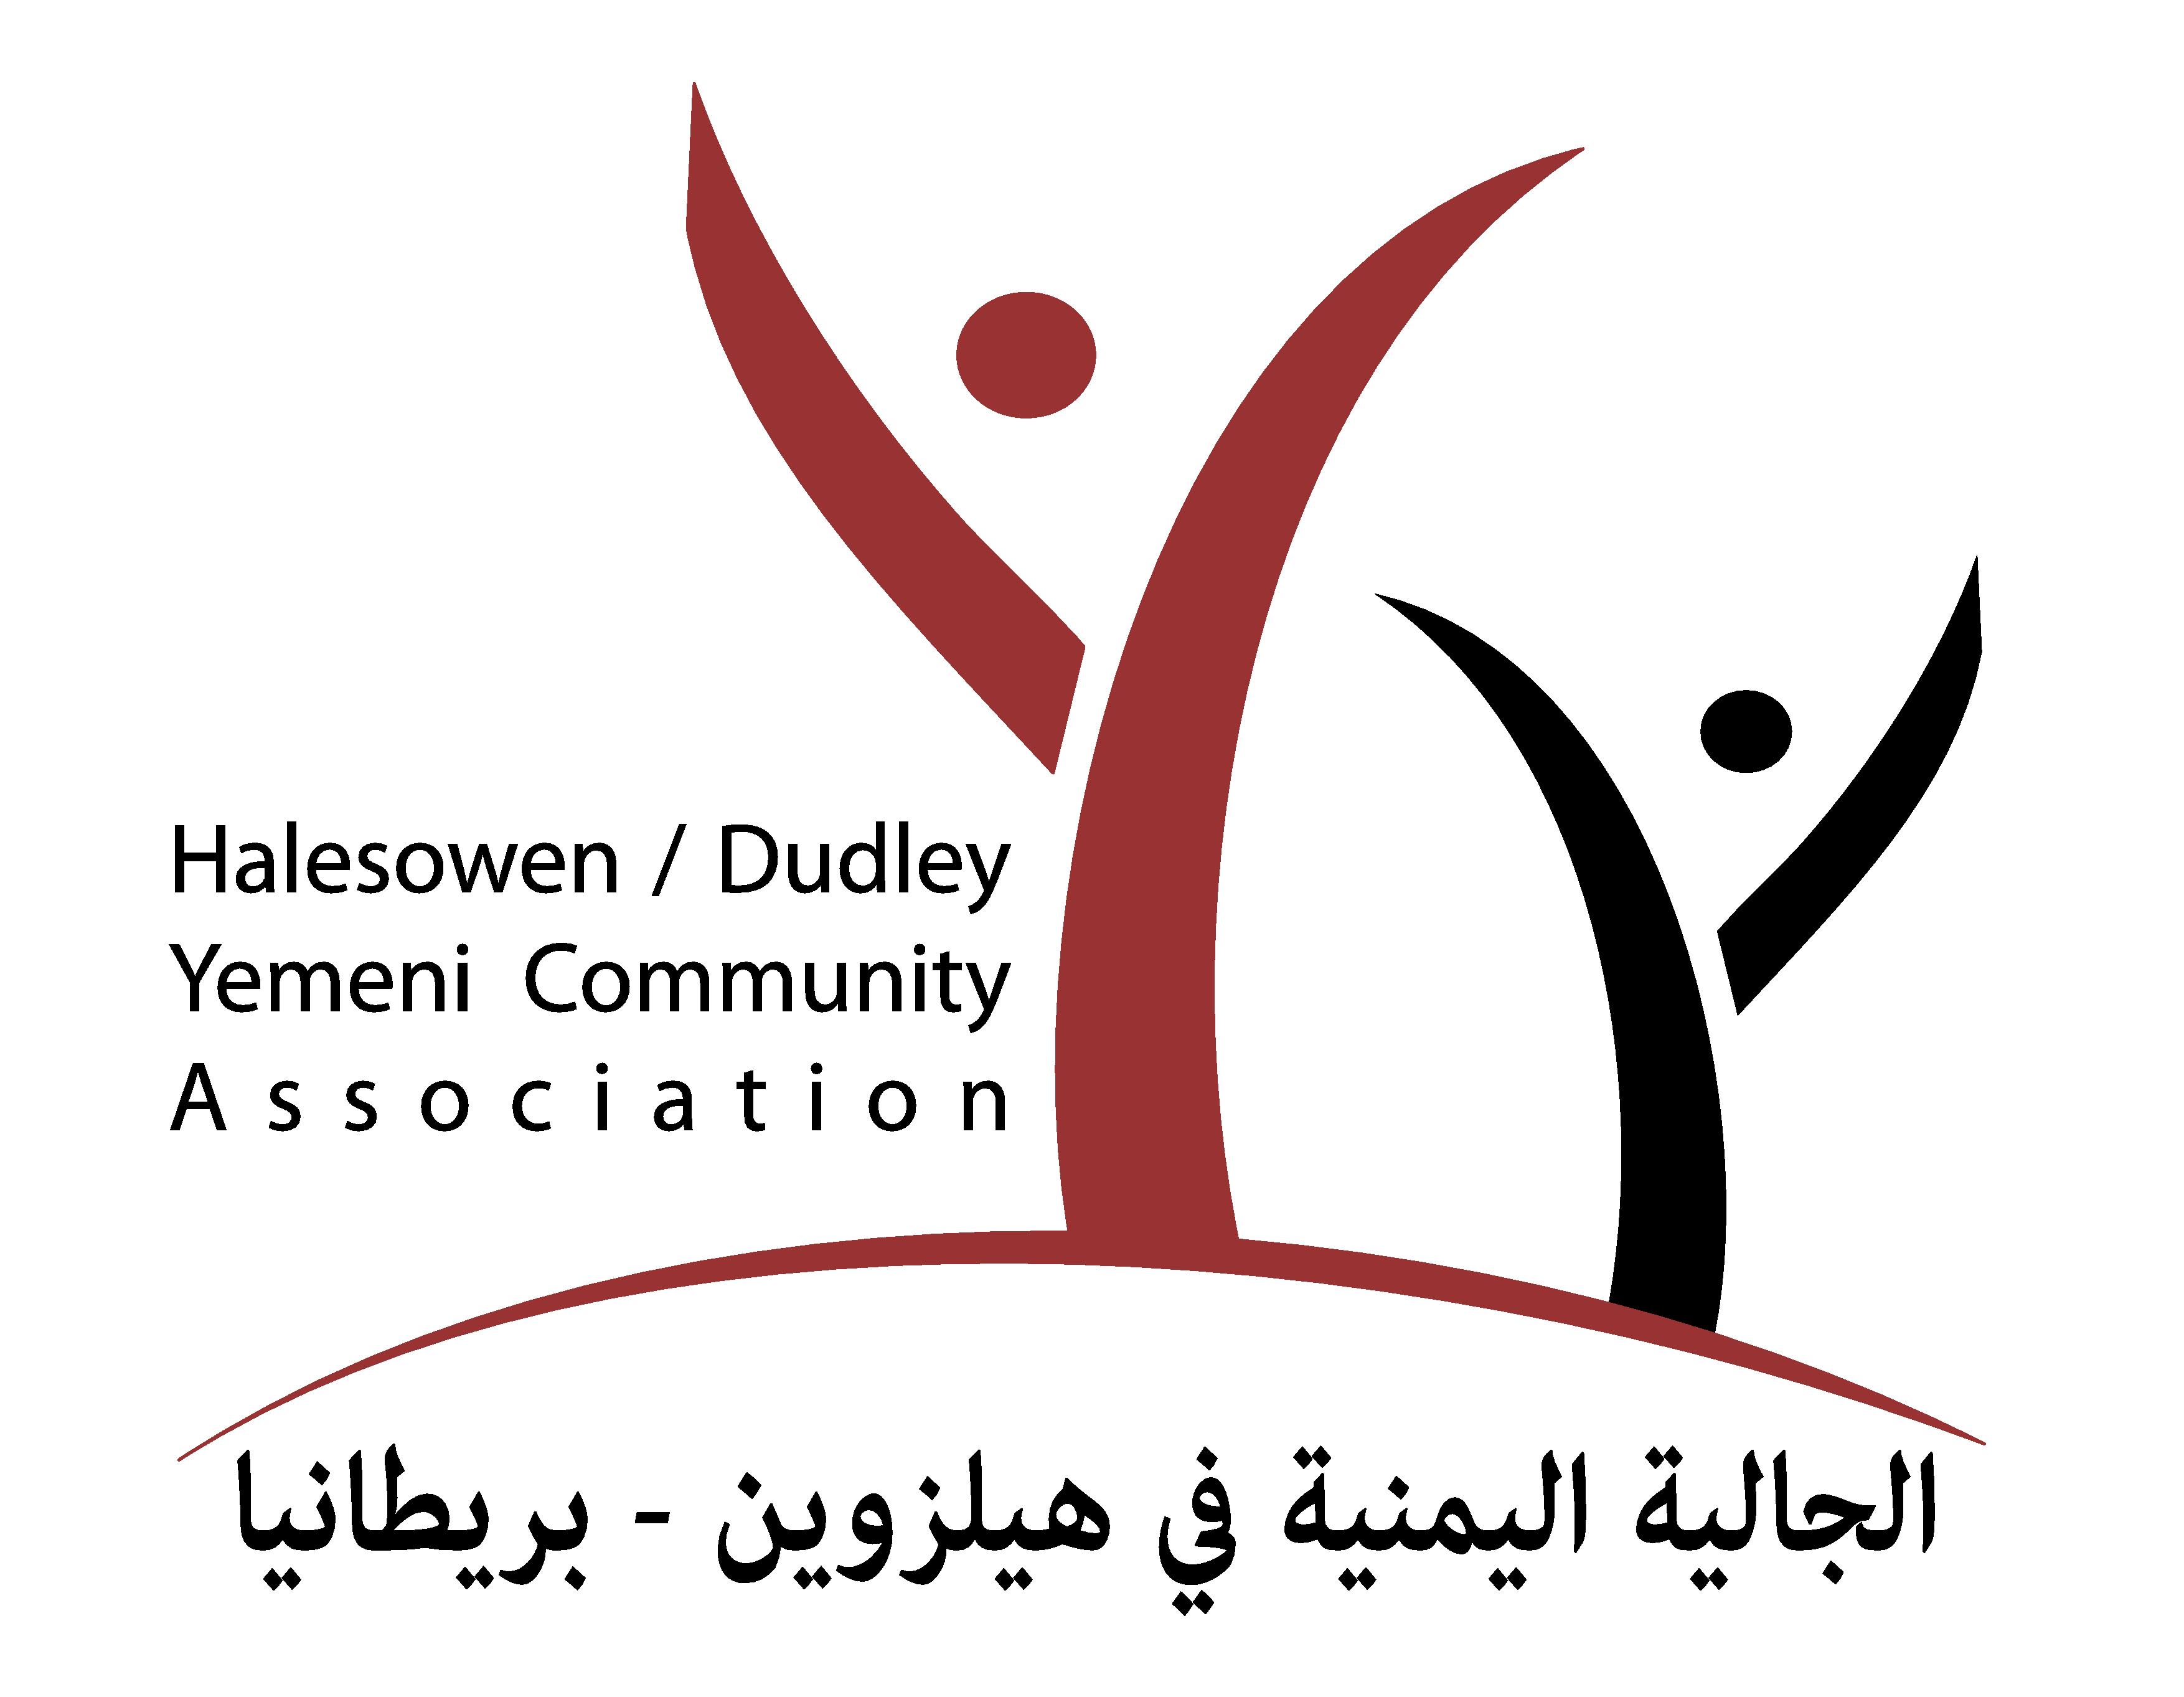 Halesowen and Dudley Yemeni Community Association (HDYCA)